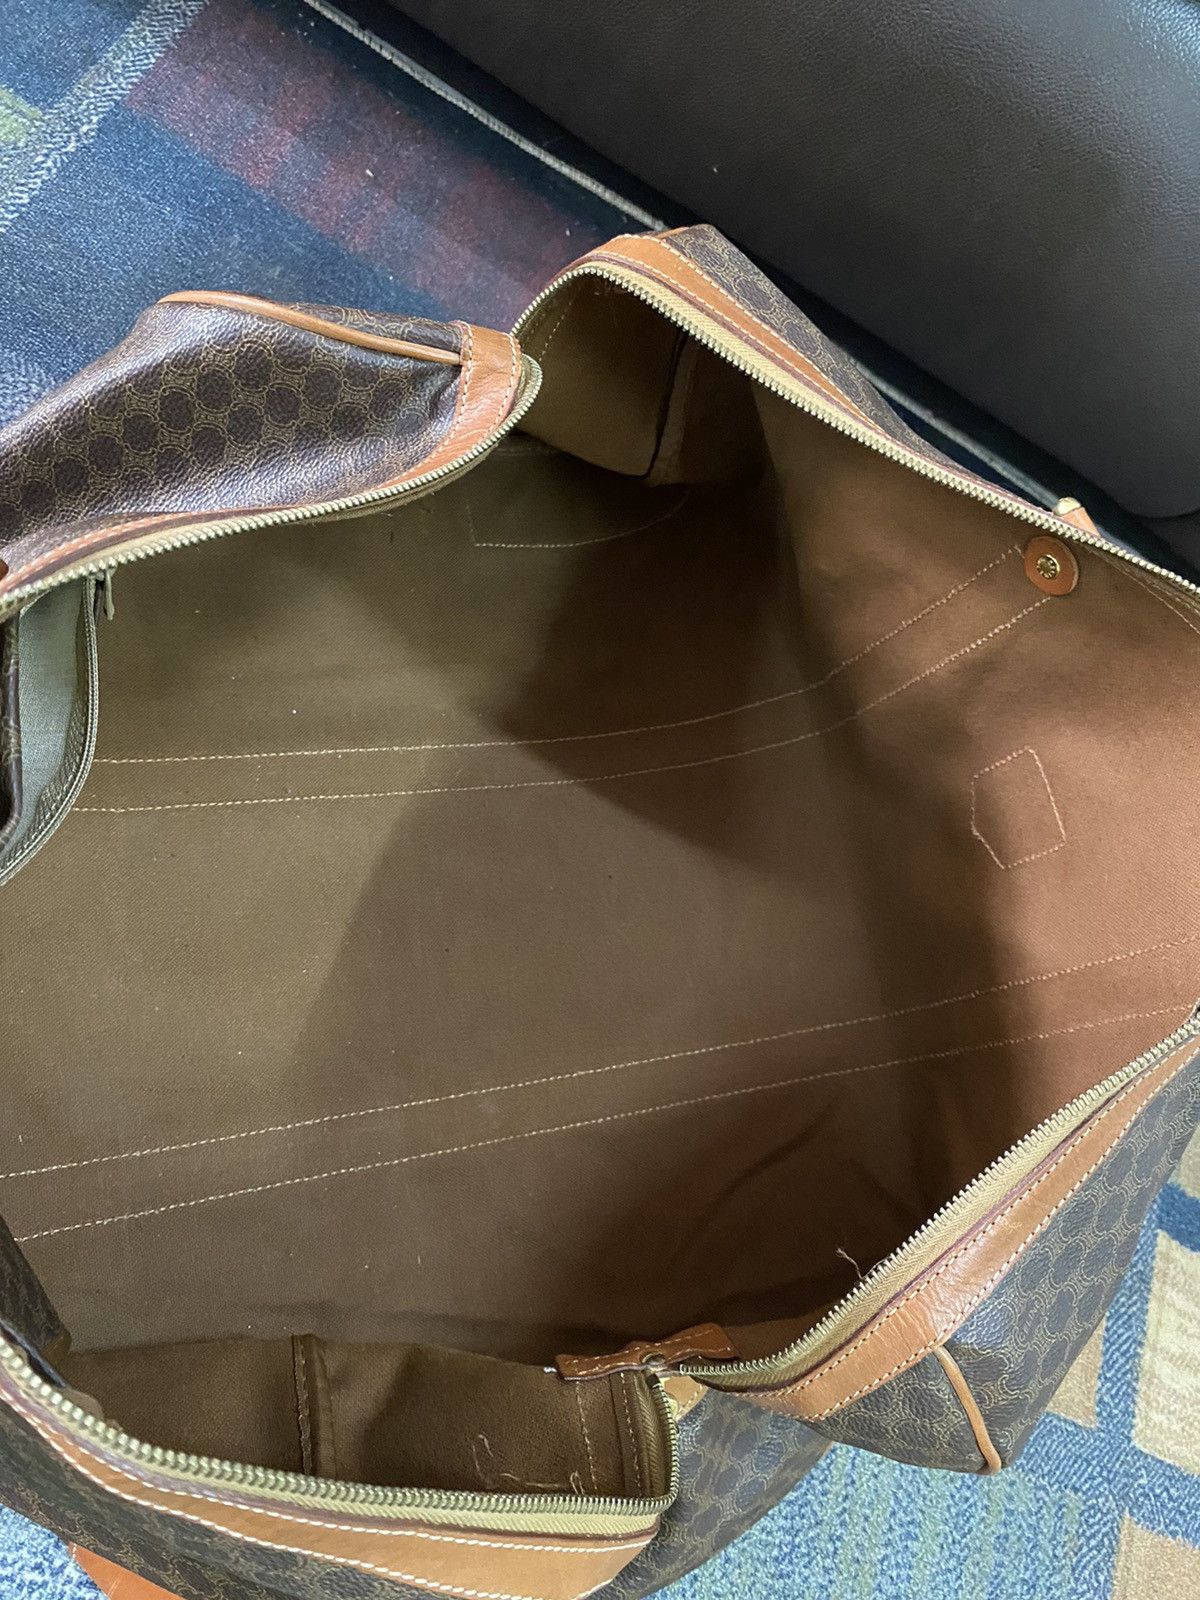 Authentic Celine Travel Bag - 21